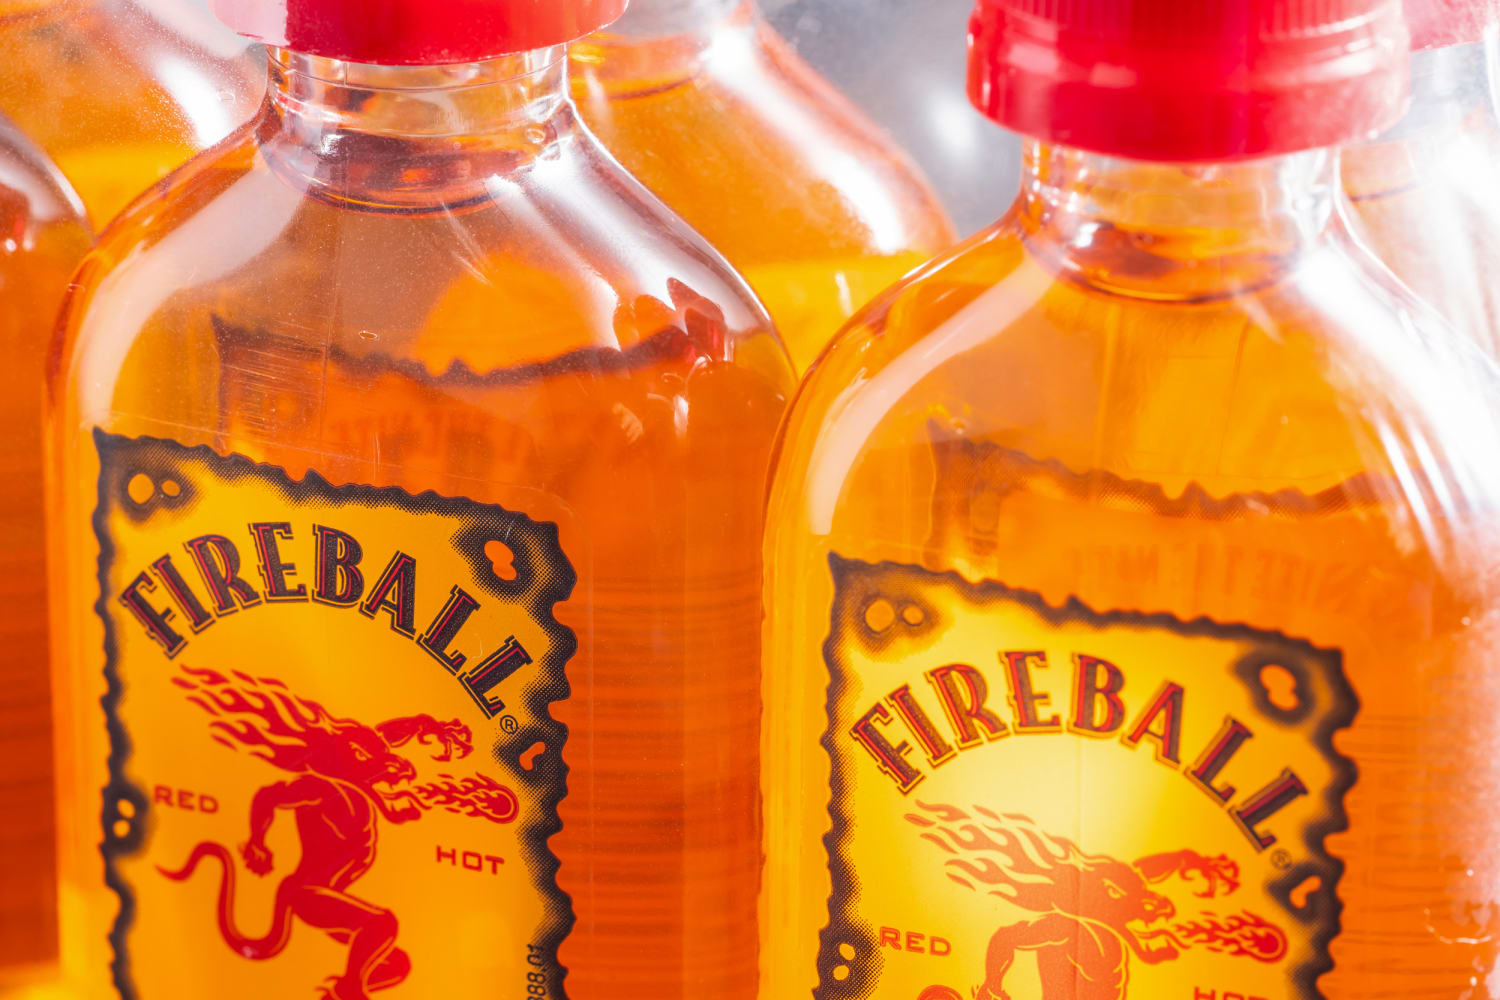 Fireball whiskey maker accused of false advertising on miniature drink bottles